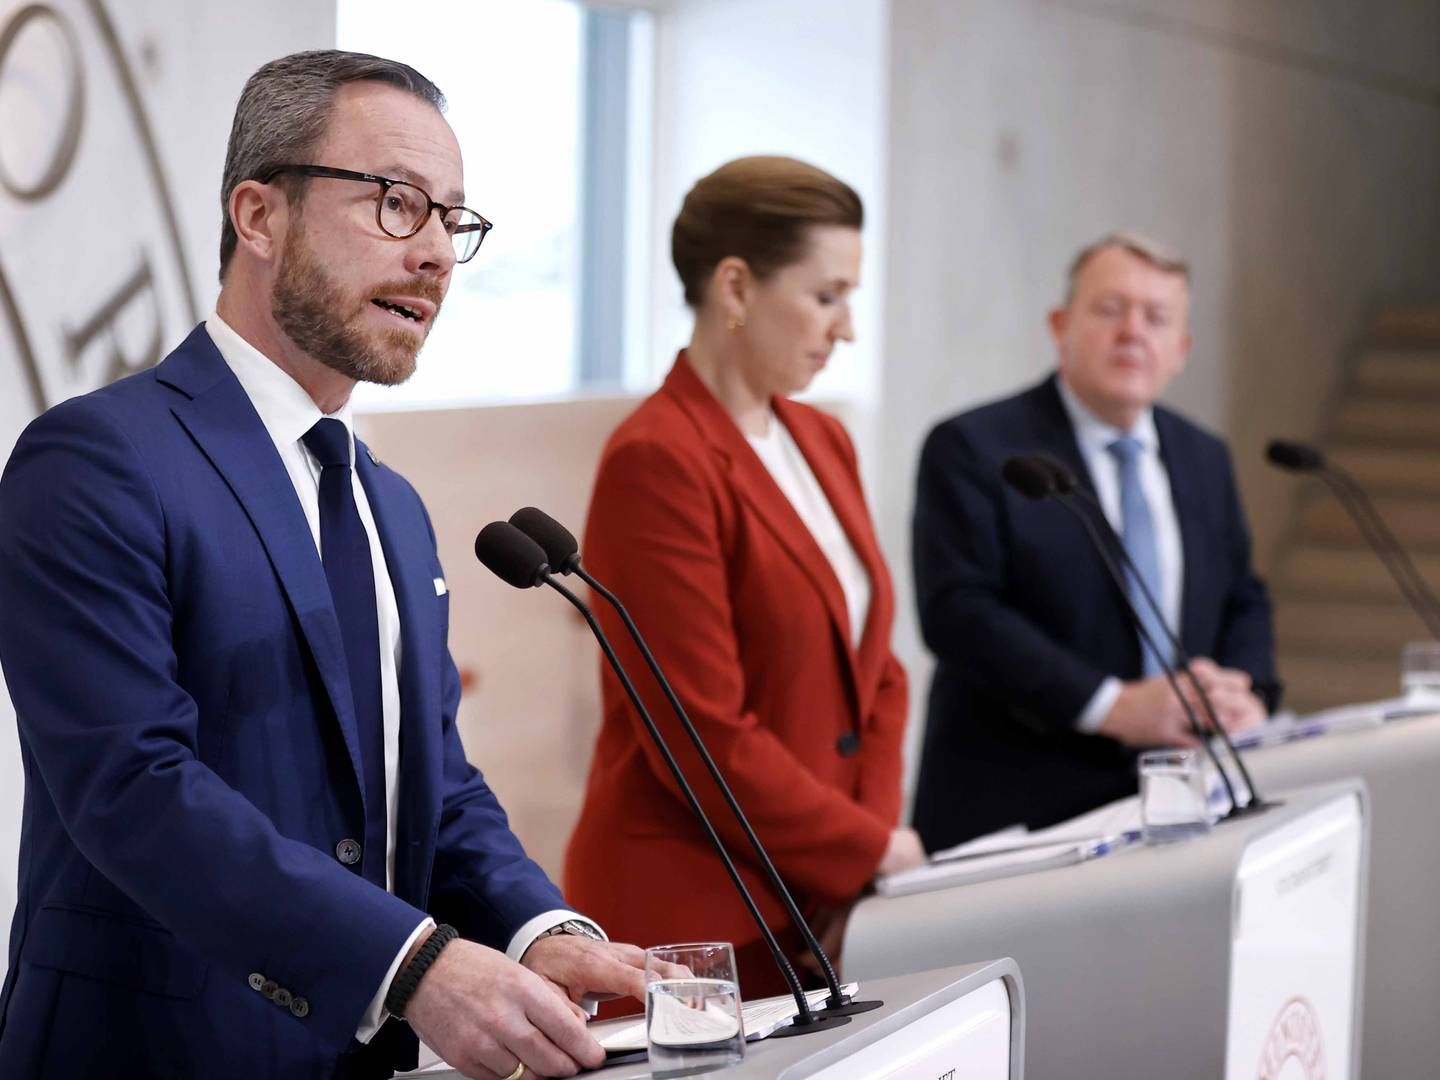 Frontpersonerne i de tre regeringspartier, Jakob Ellemann-Jensen (V), Mette Frederiksen (S) og Lars Løkke Rasmussen (M) | Foto: Jens Dresling / Ritzau Scanpix